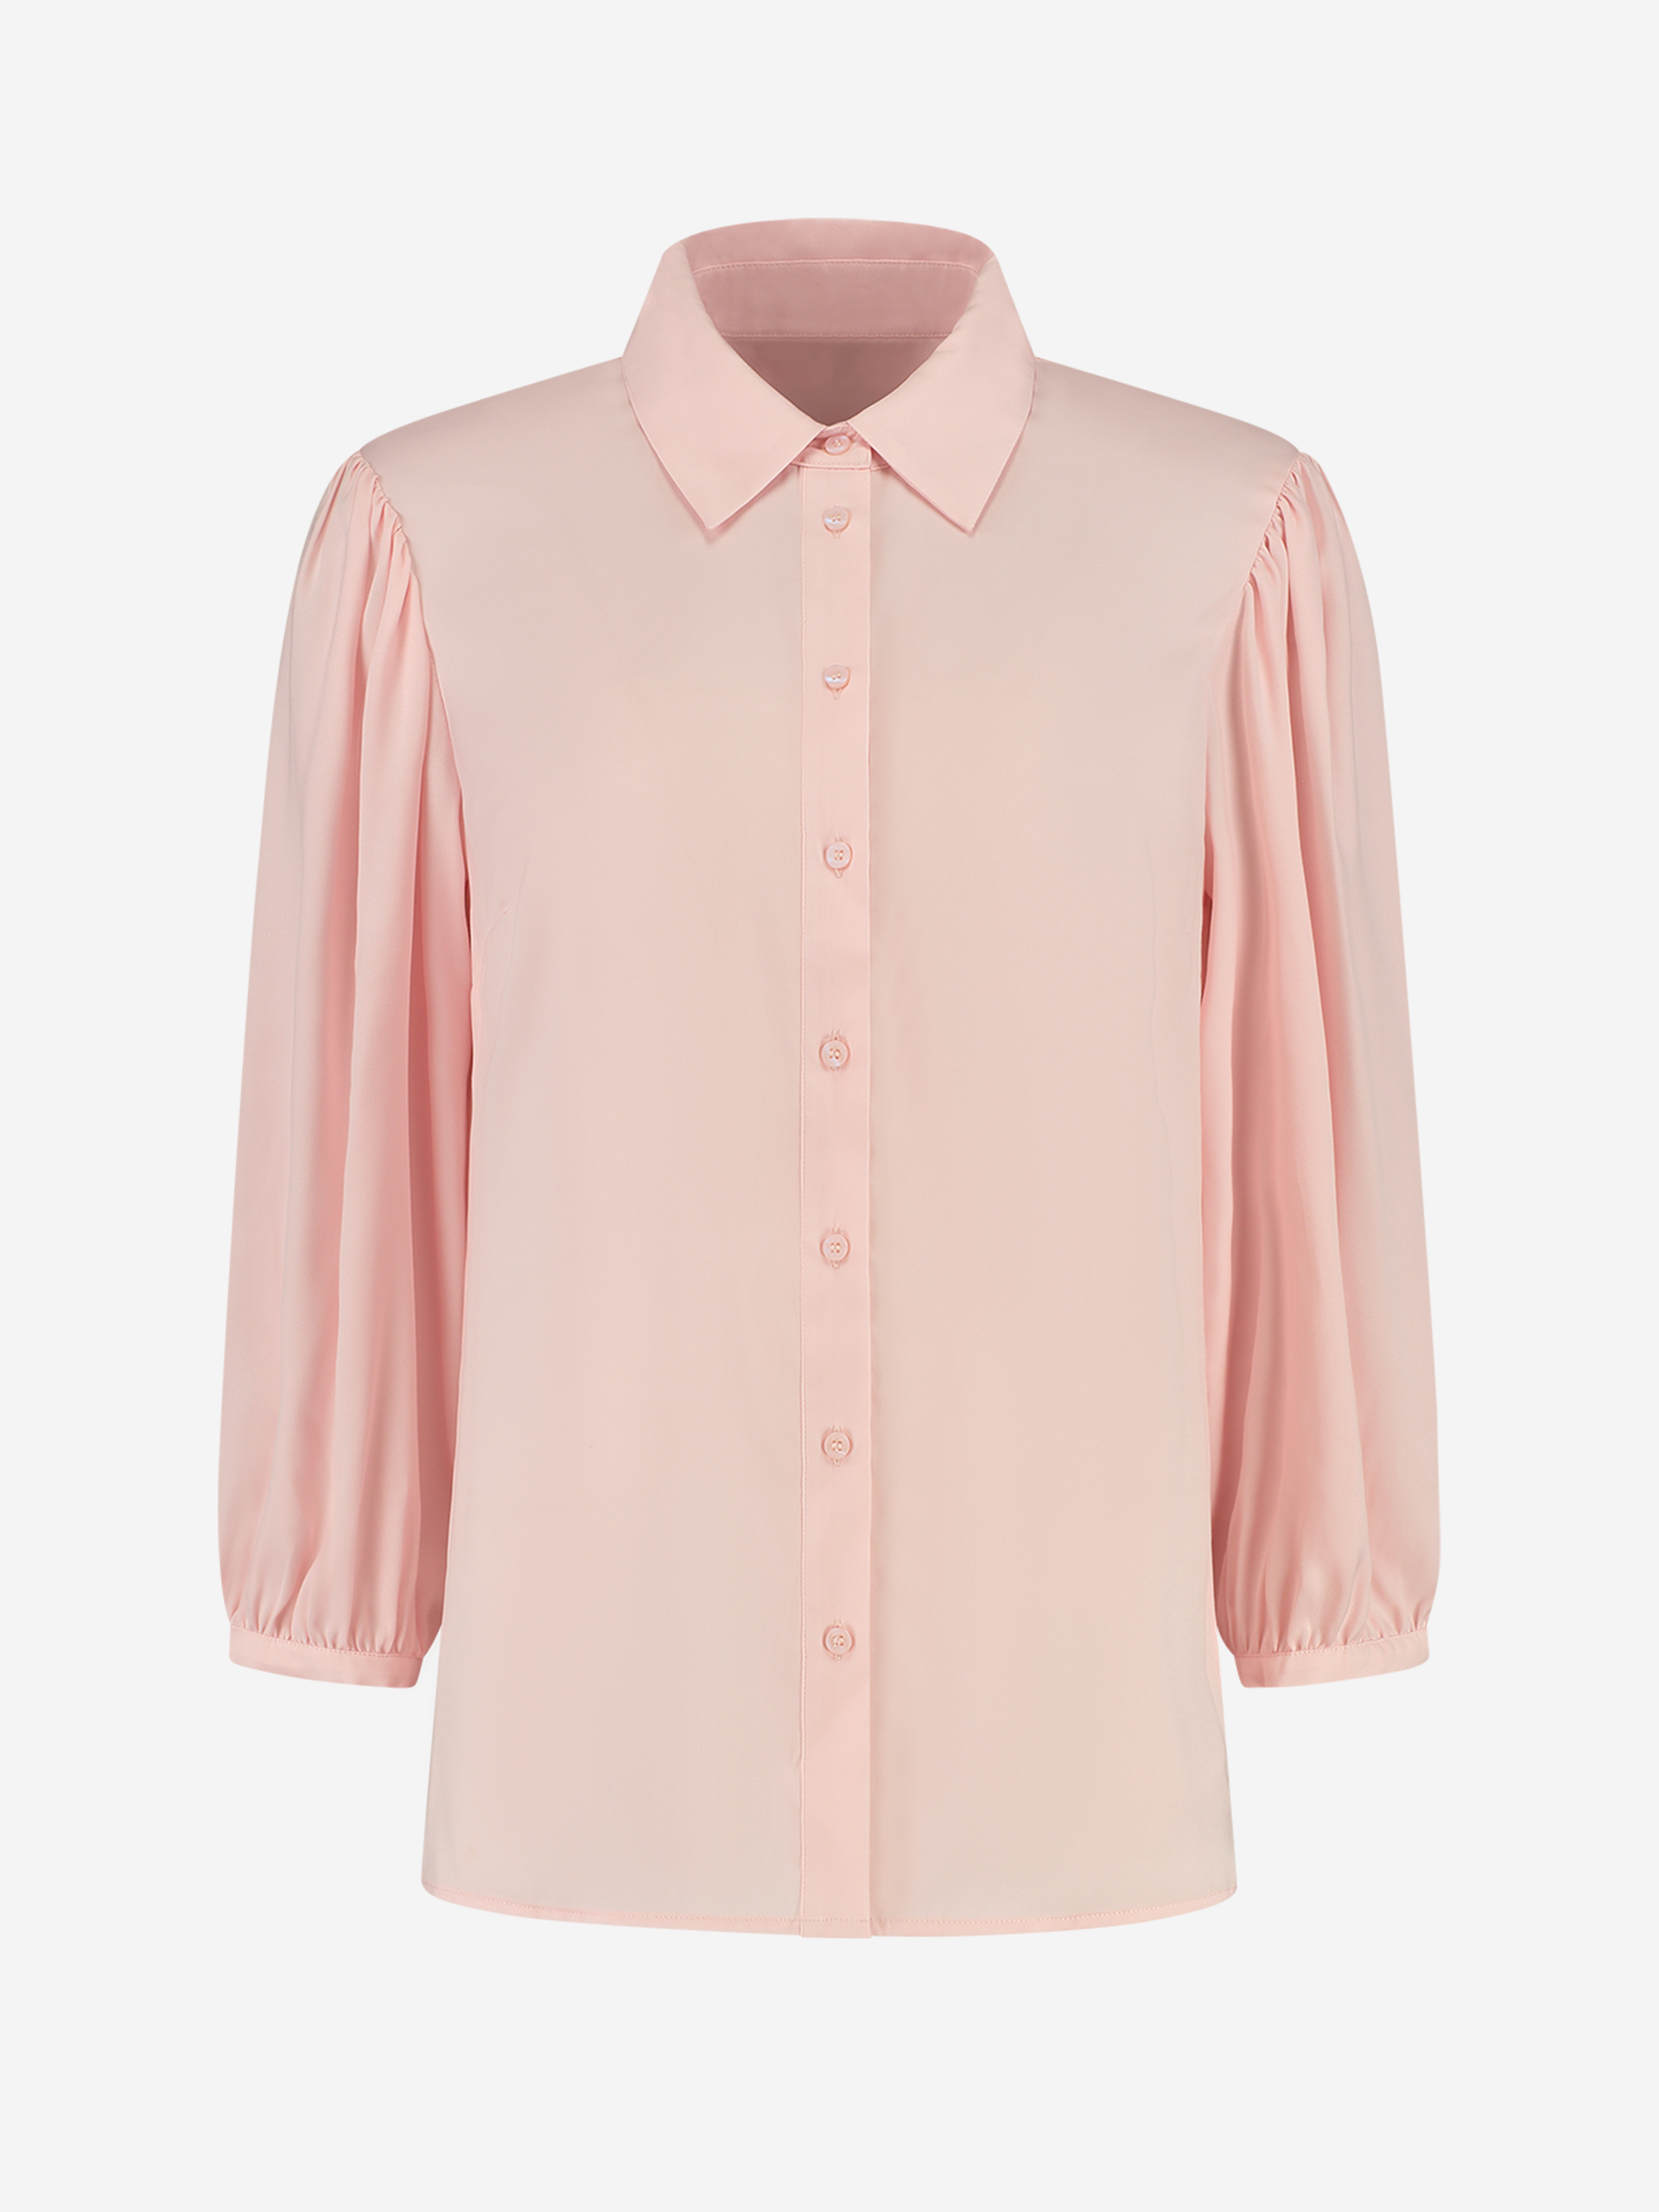 Semitransparent blouse